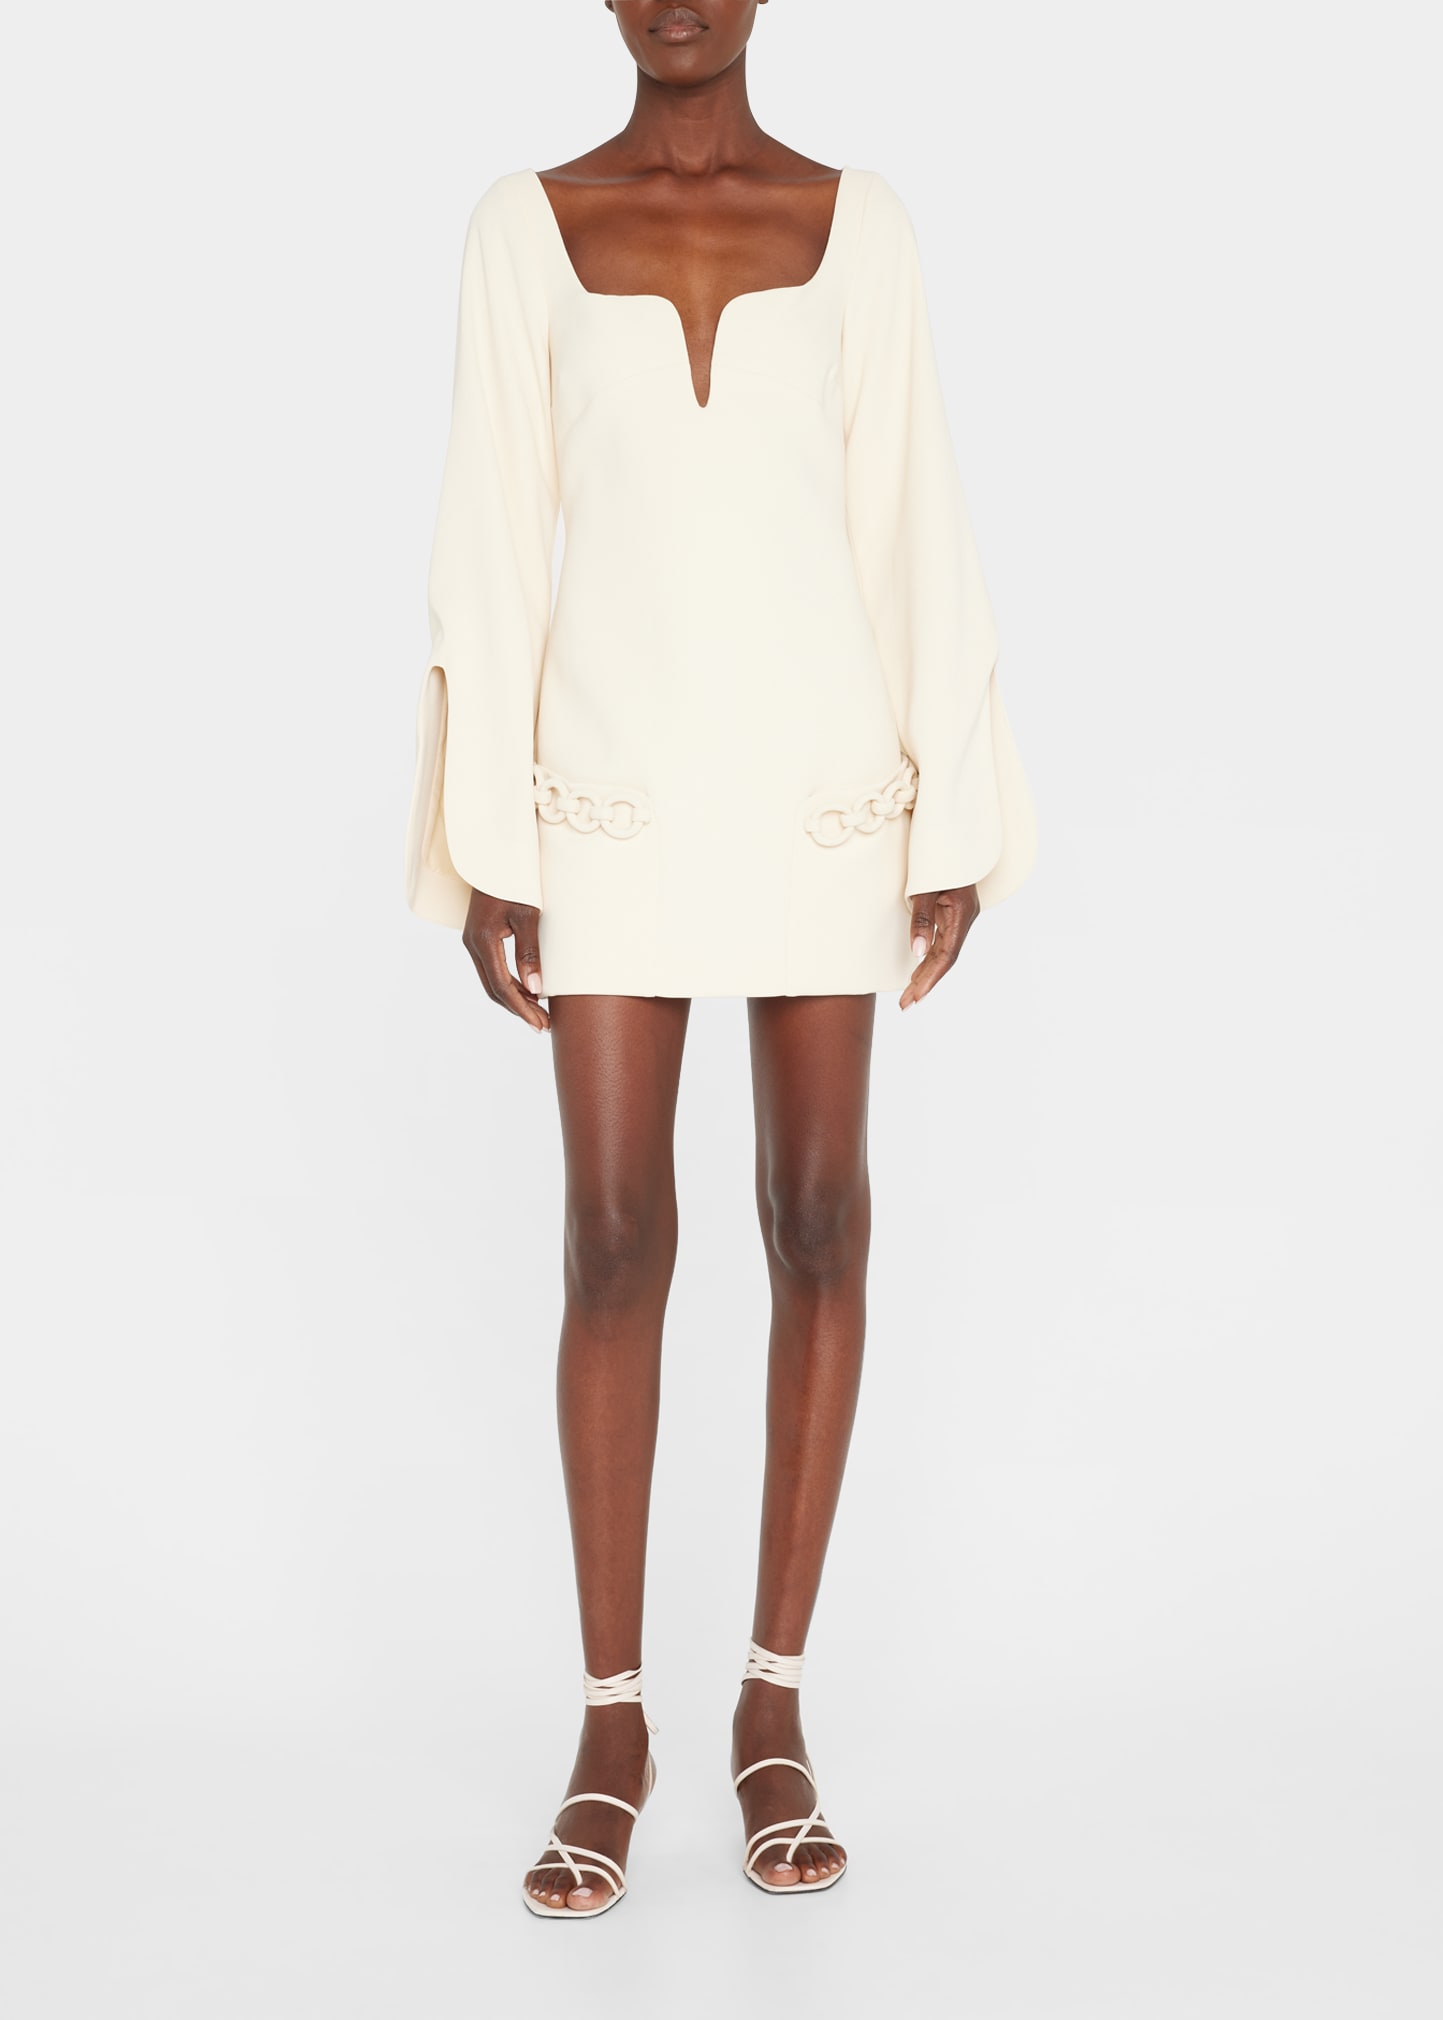 Azize Split-Sleeve Chain Mini Dress